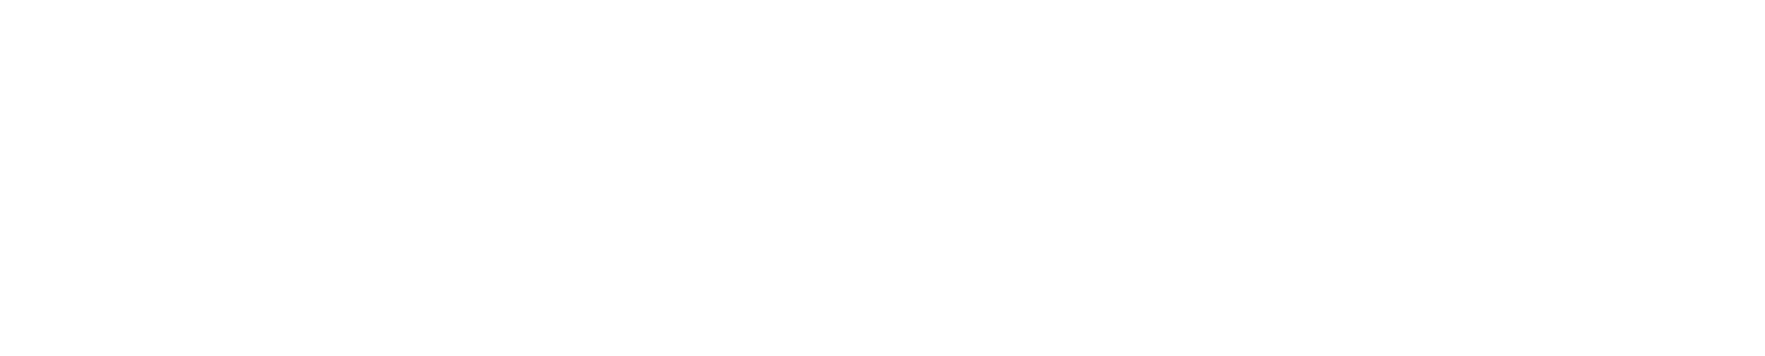 FoxyDeals logo